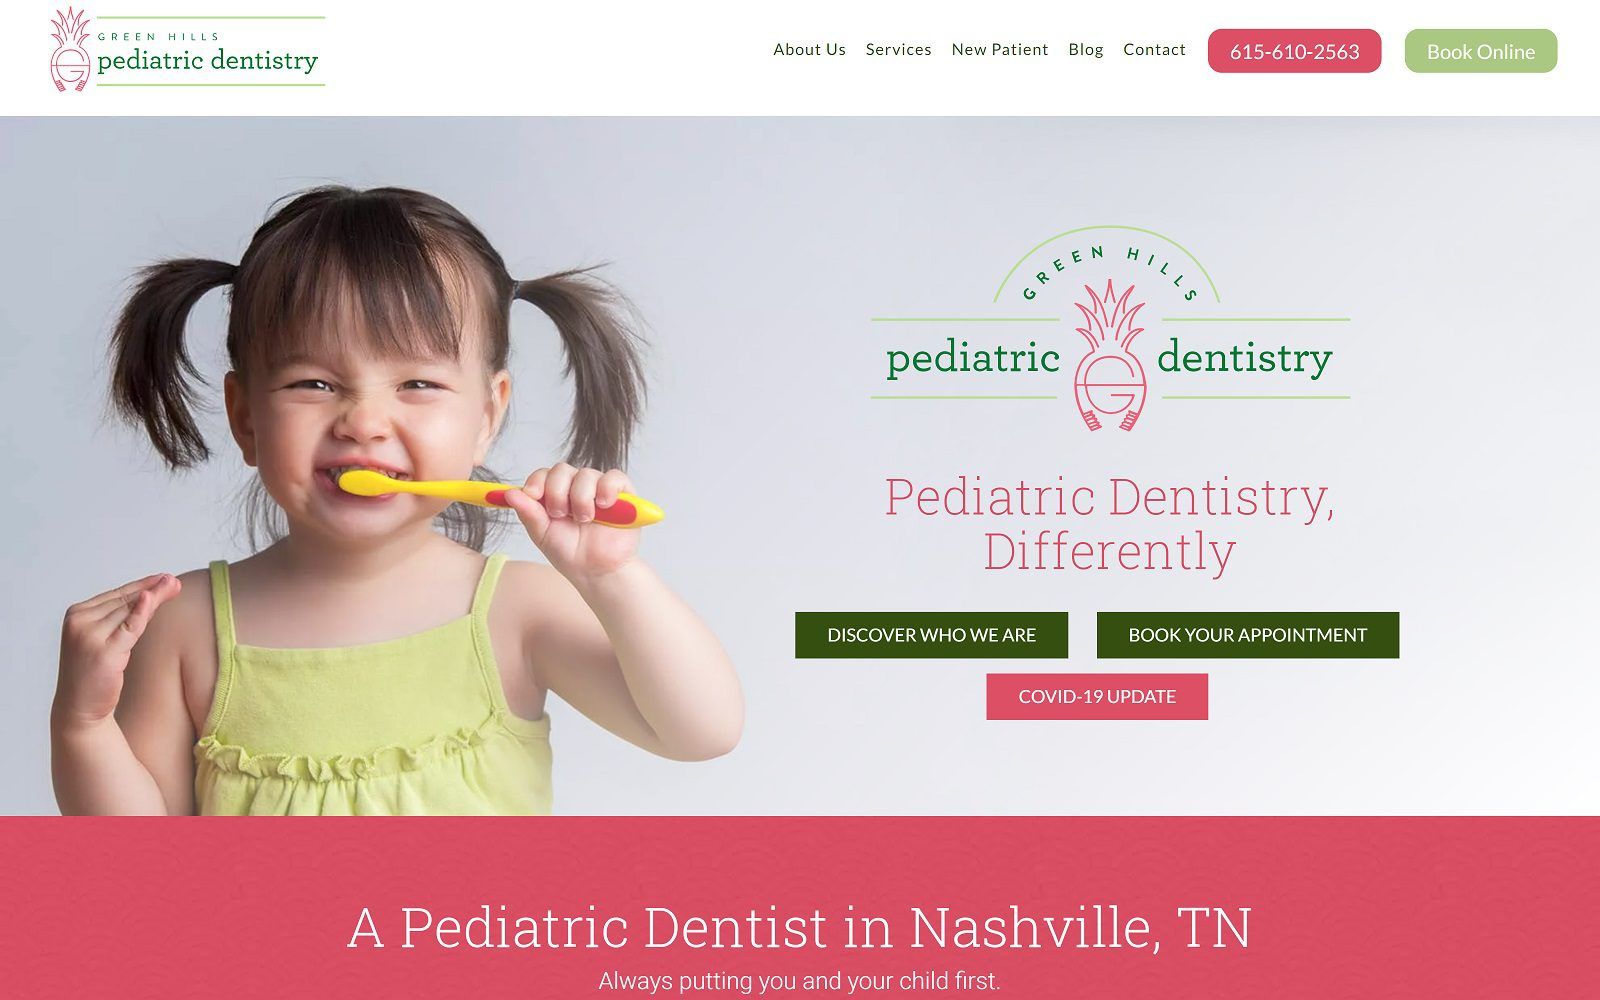 The screenshot of green hills pediatric dentistry website